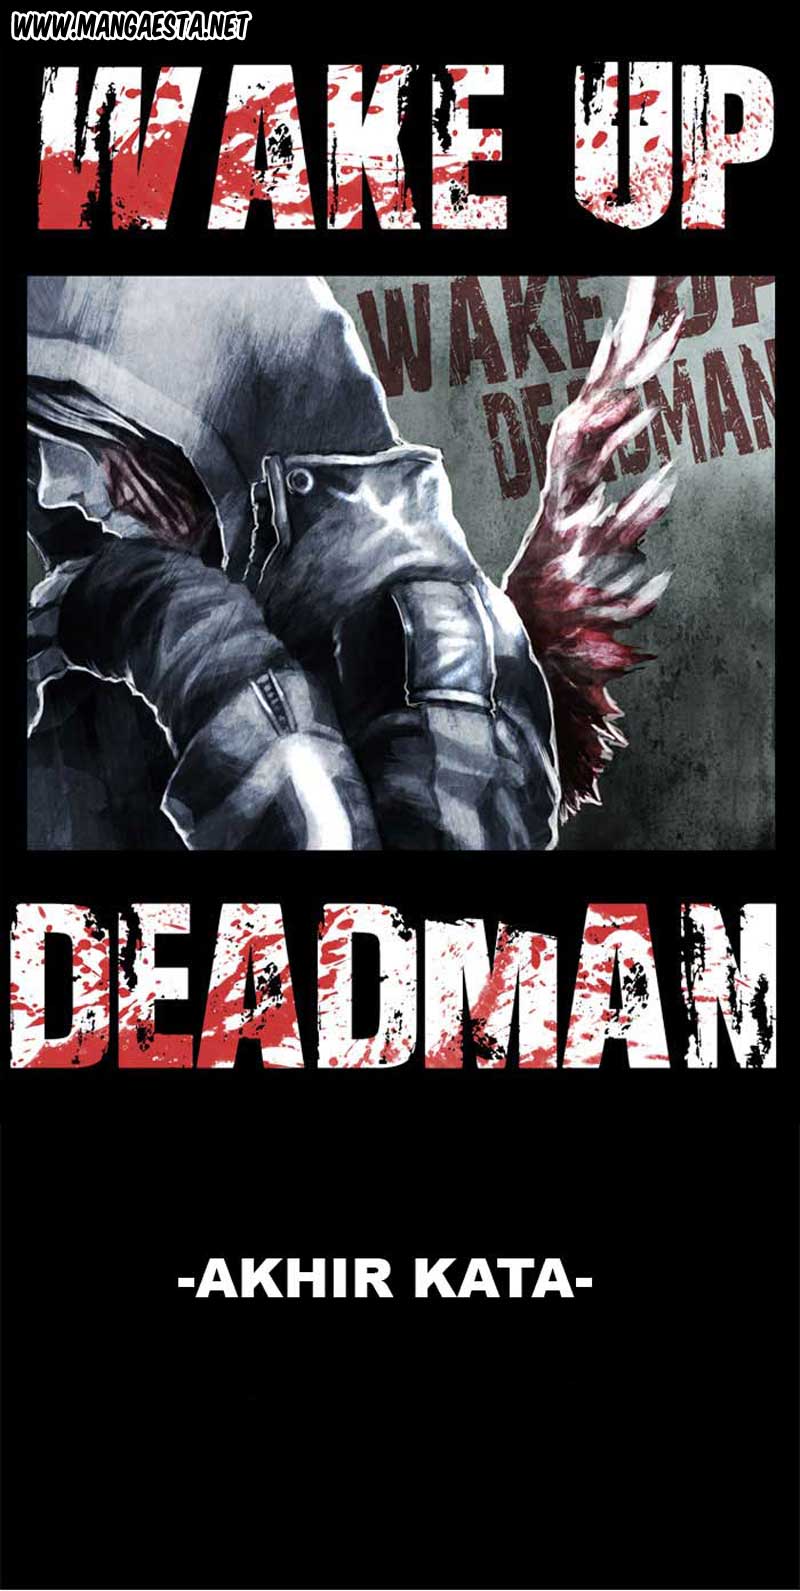 Wake Up Deadman Chapter 27